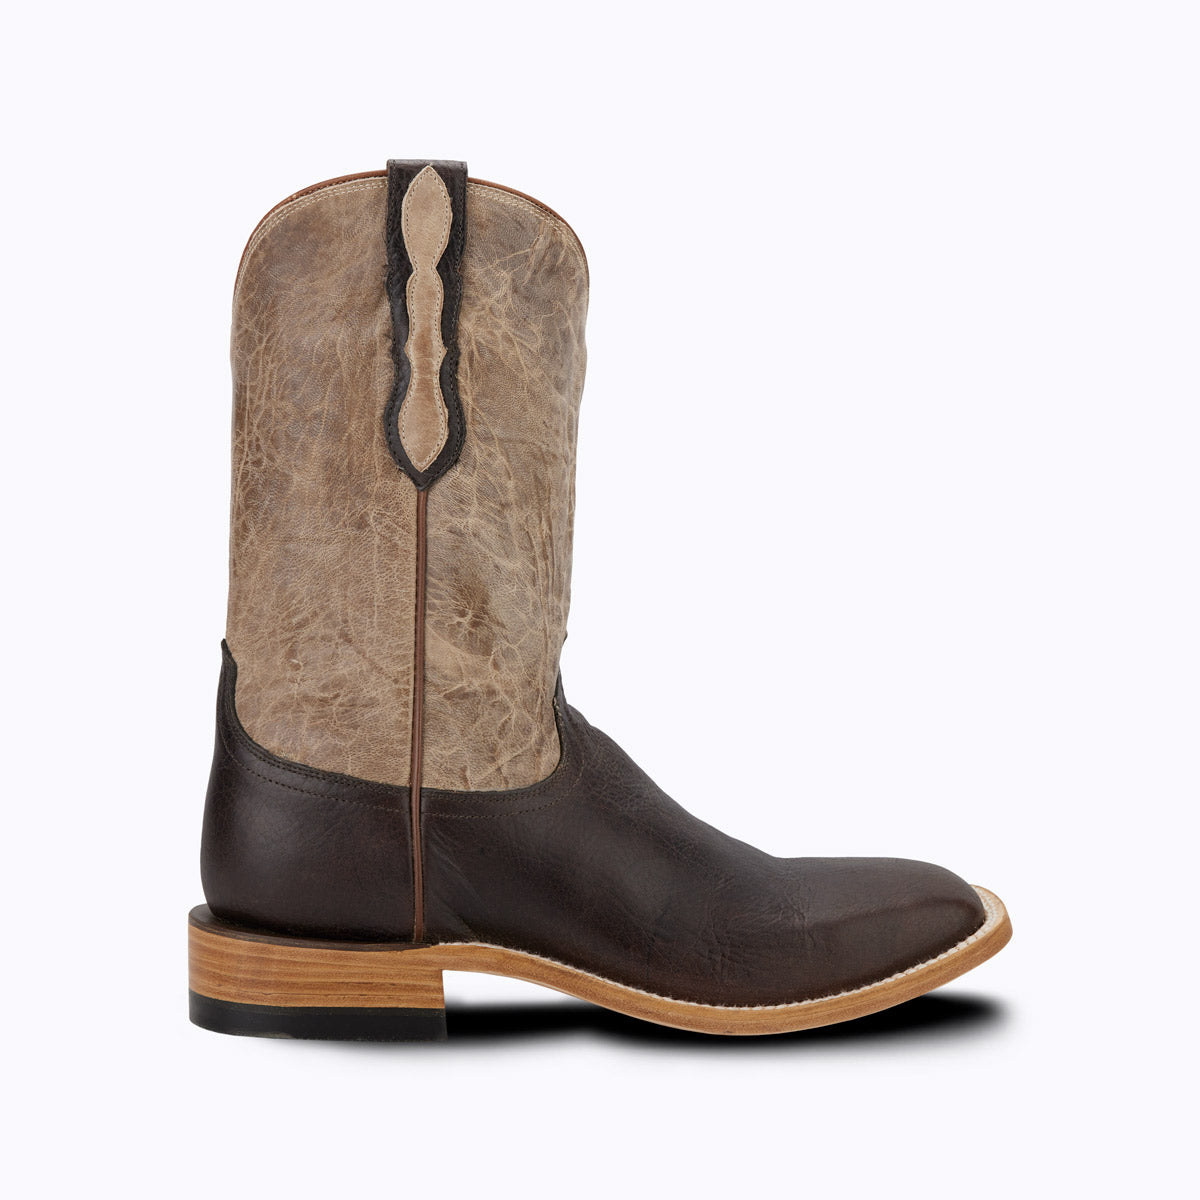 Jackson - Sale Mens Western Boot - Capitan Boots